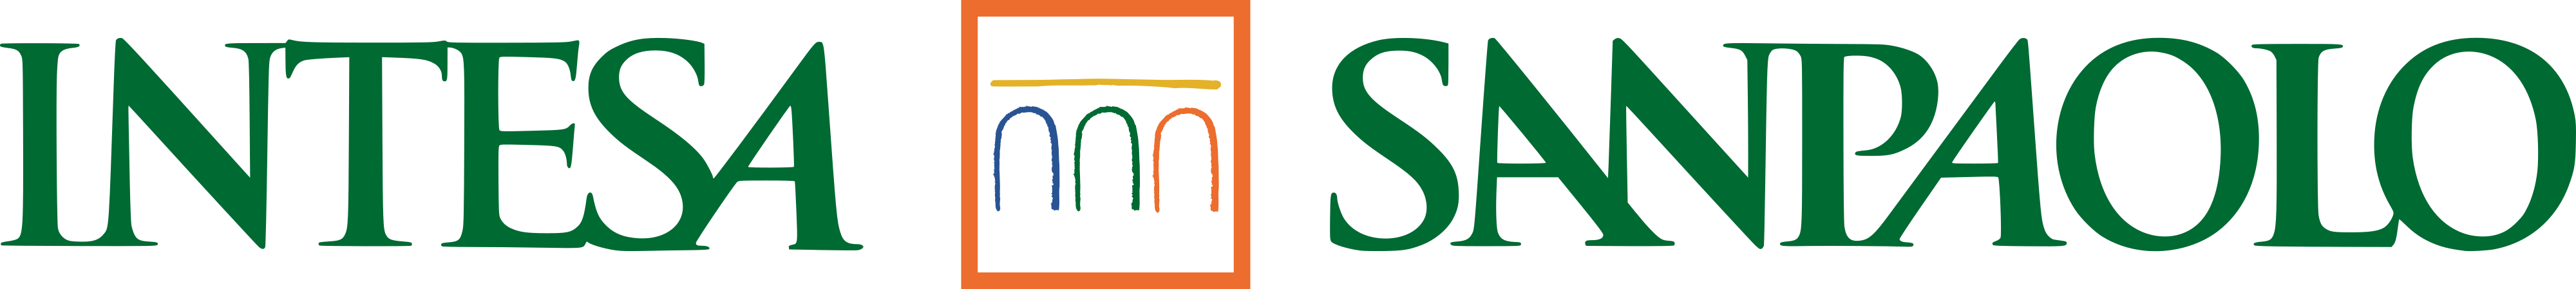 Intesa sanpaolo bank png logo